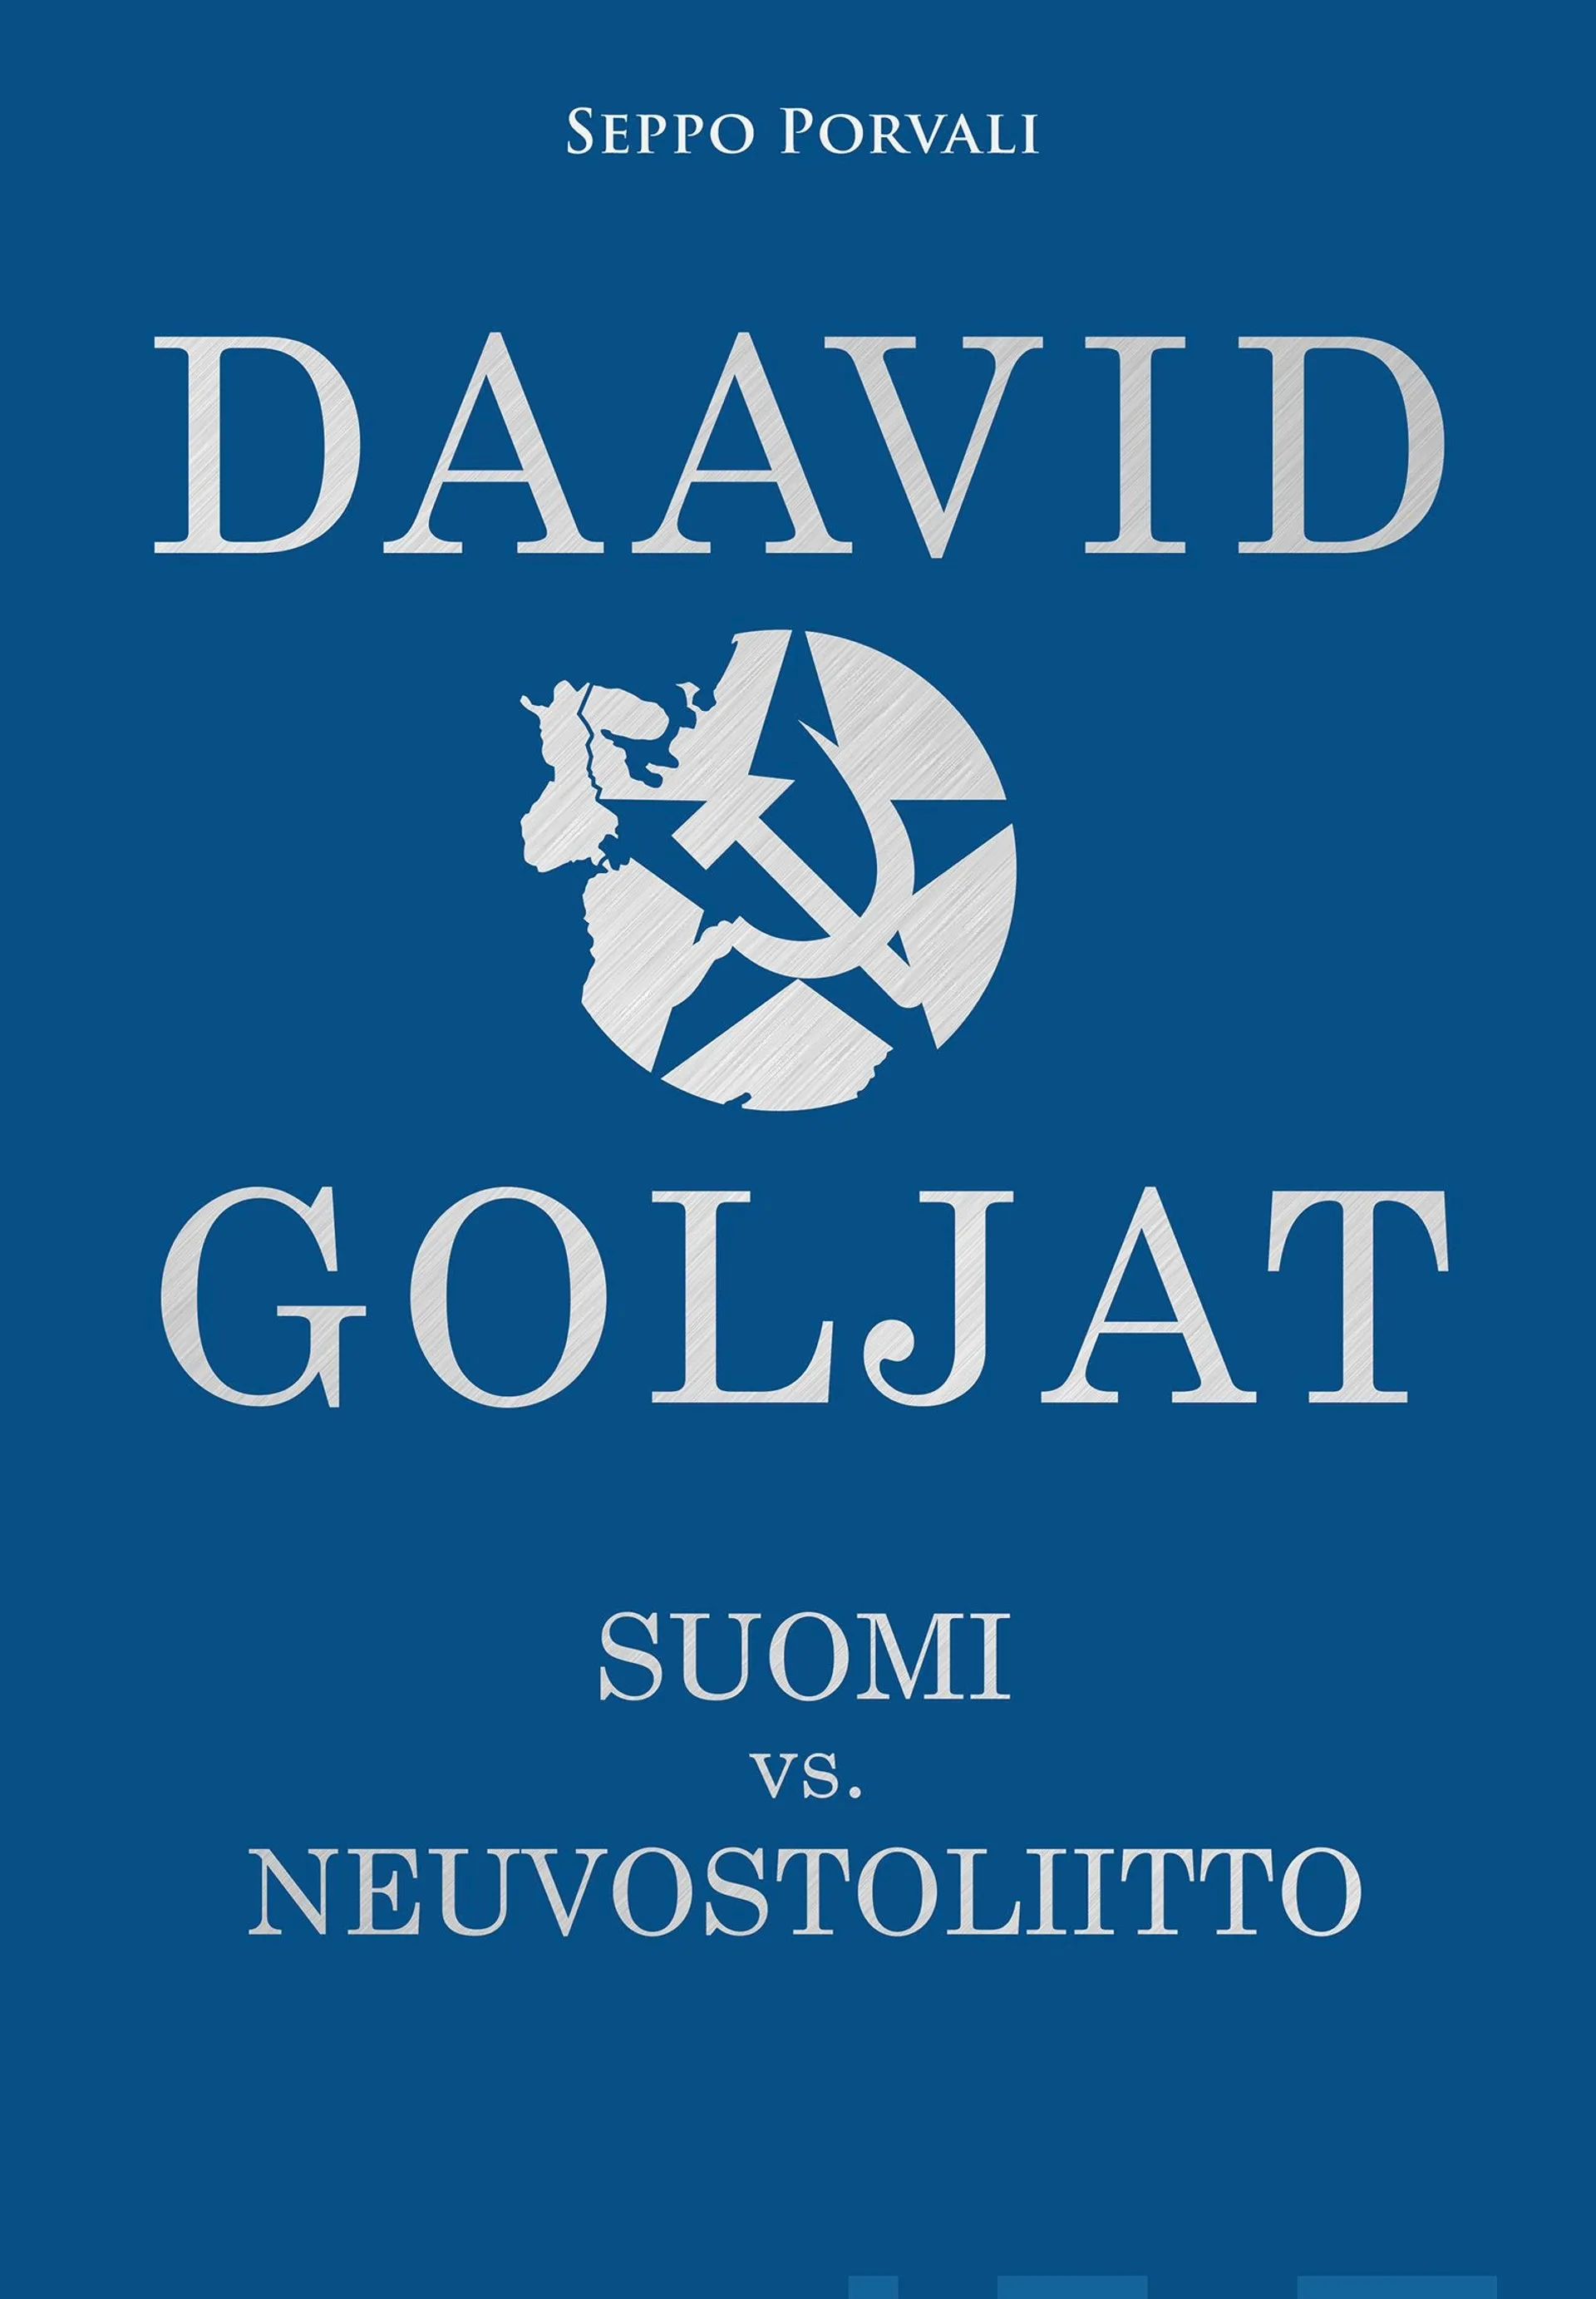 Porvali, Suomi - Neuvostoliitto - Daavid vs Goljat